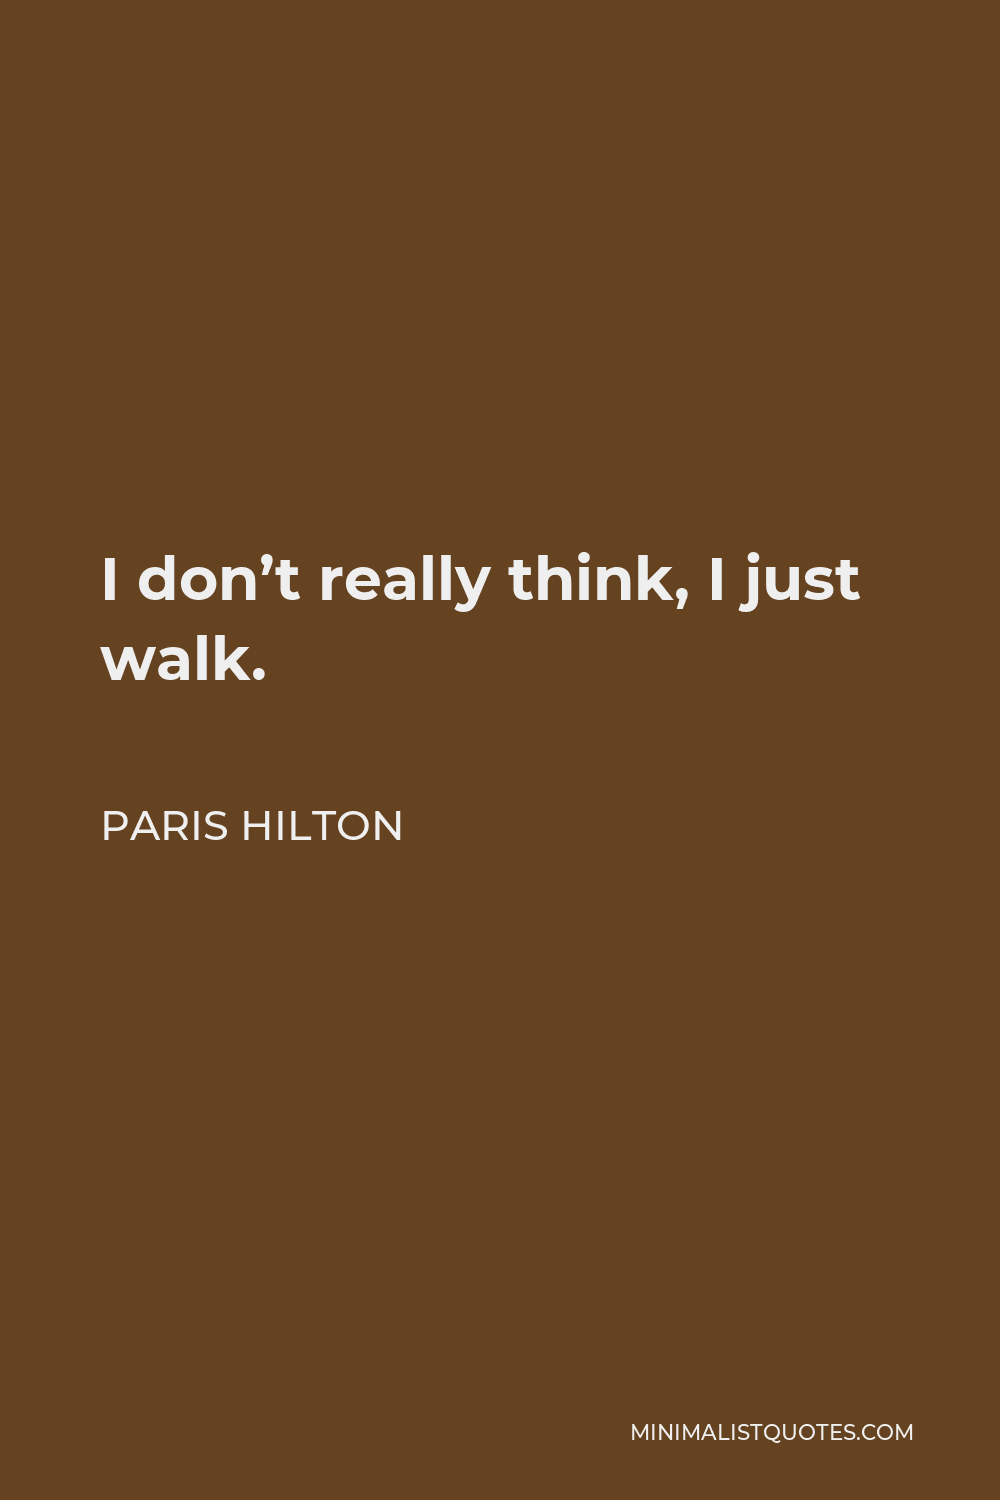 Paris Hilton Quote - I don’t really think, I just walk.